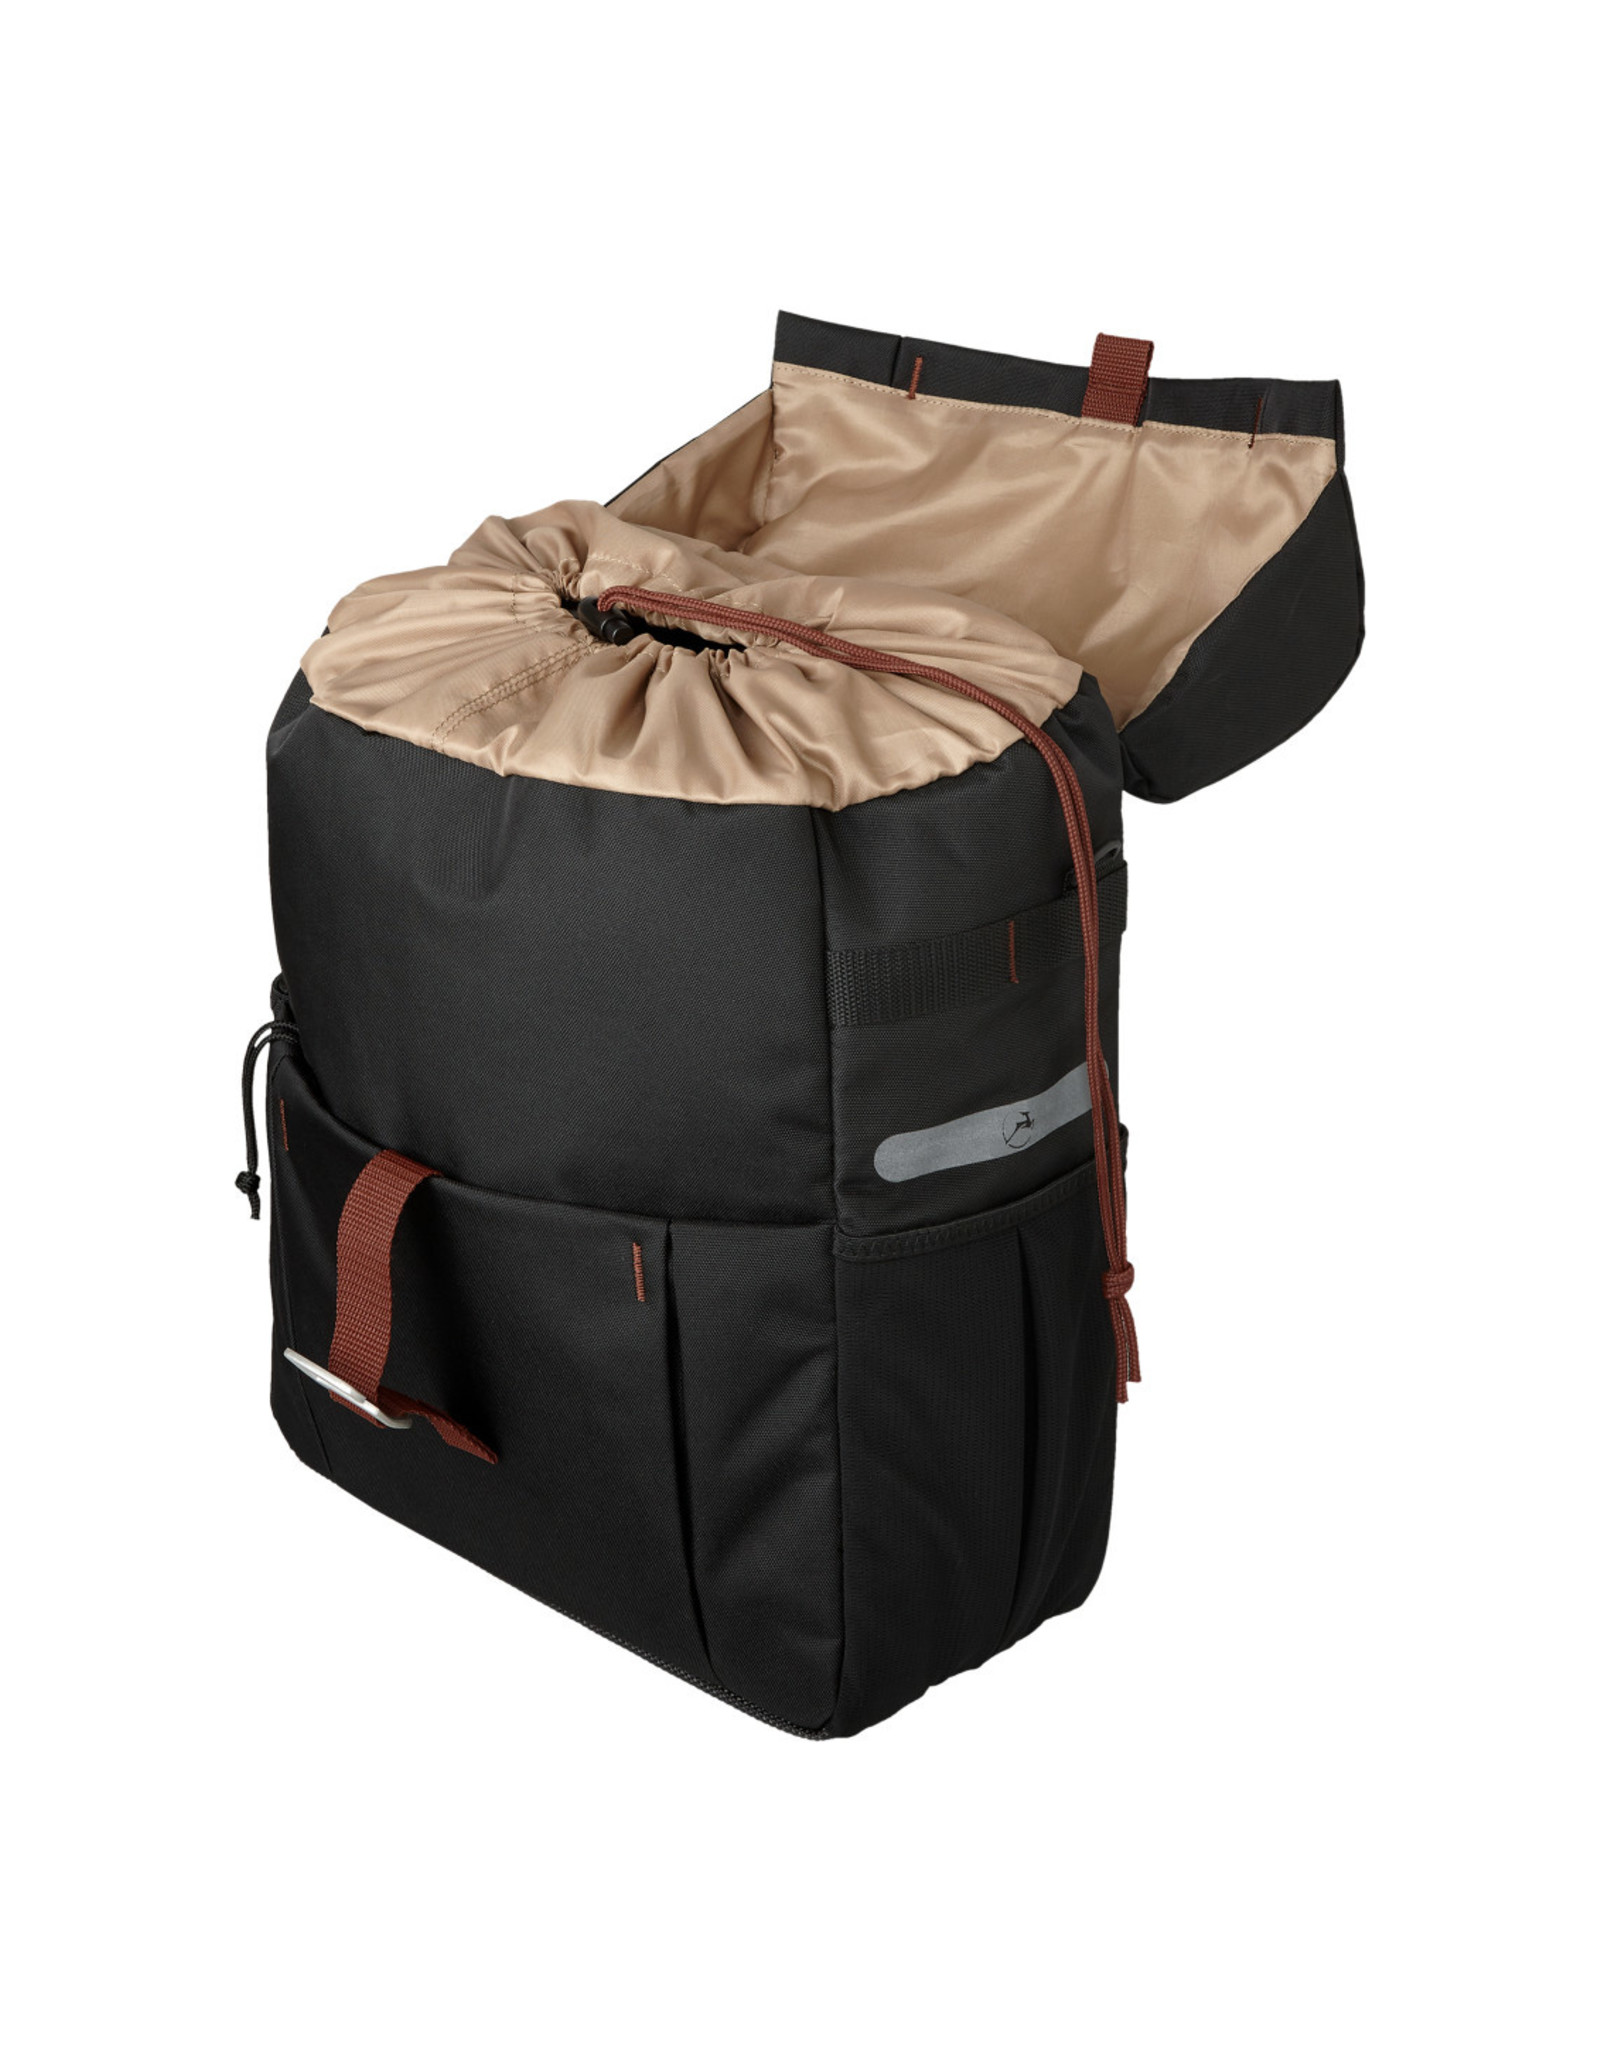 Gazelle Gazelle - Luggage - Single Pannier, Black with Brown straps